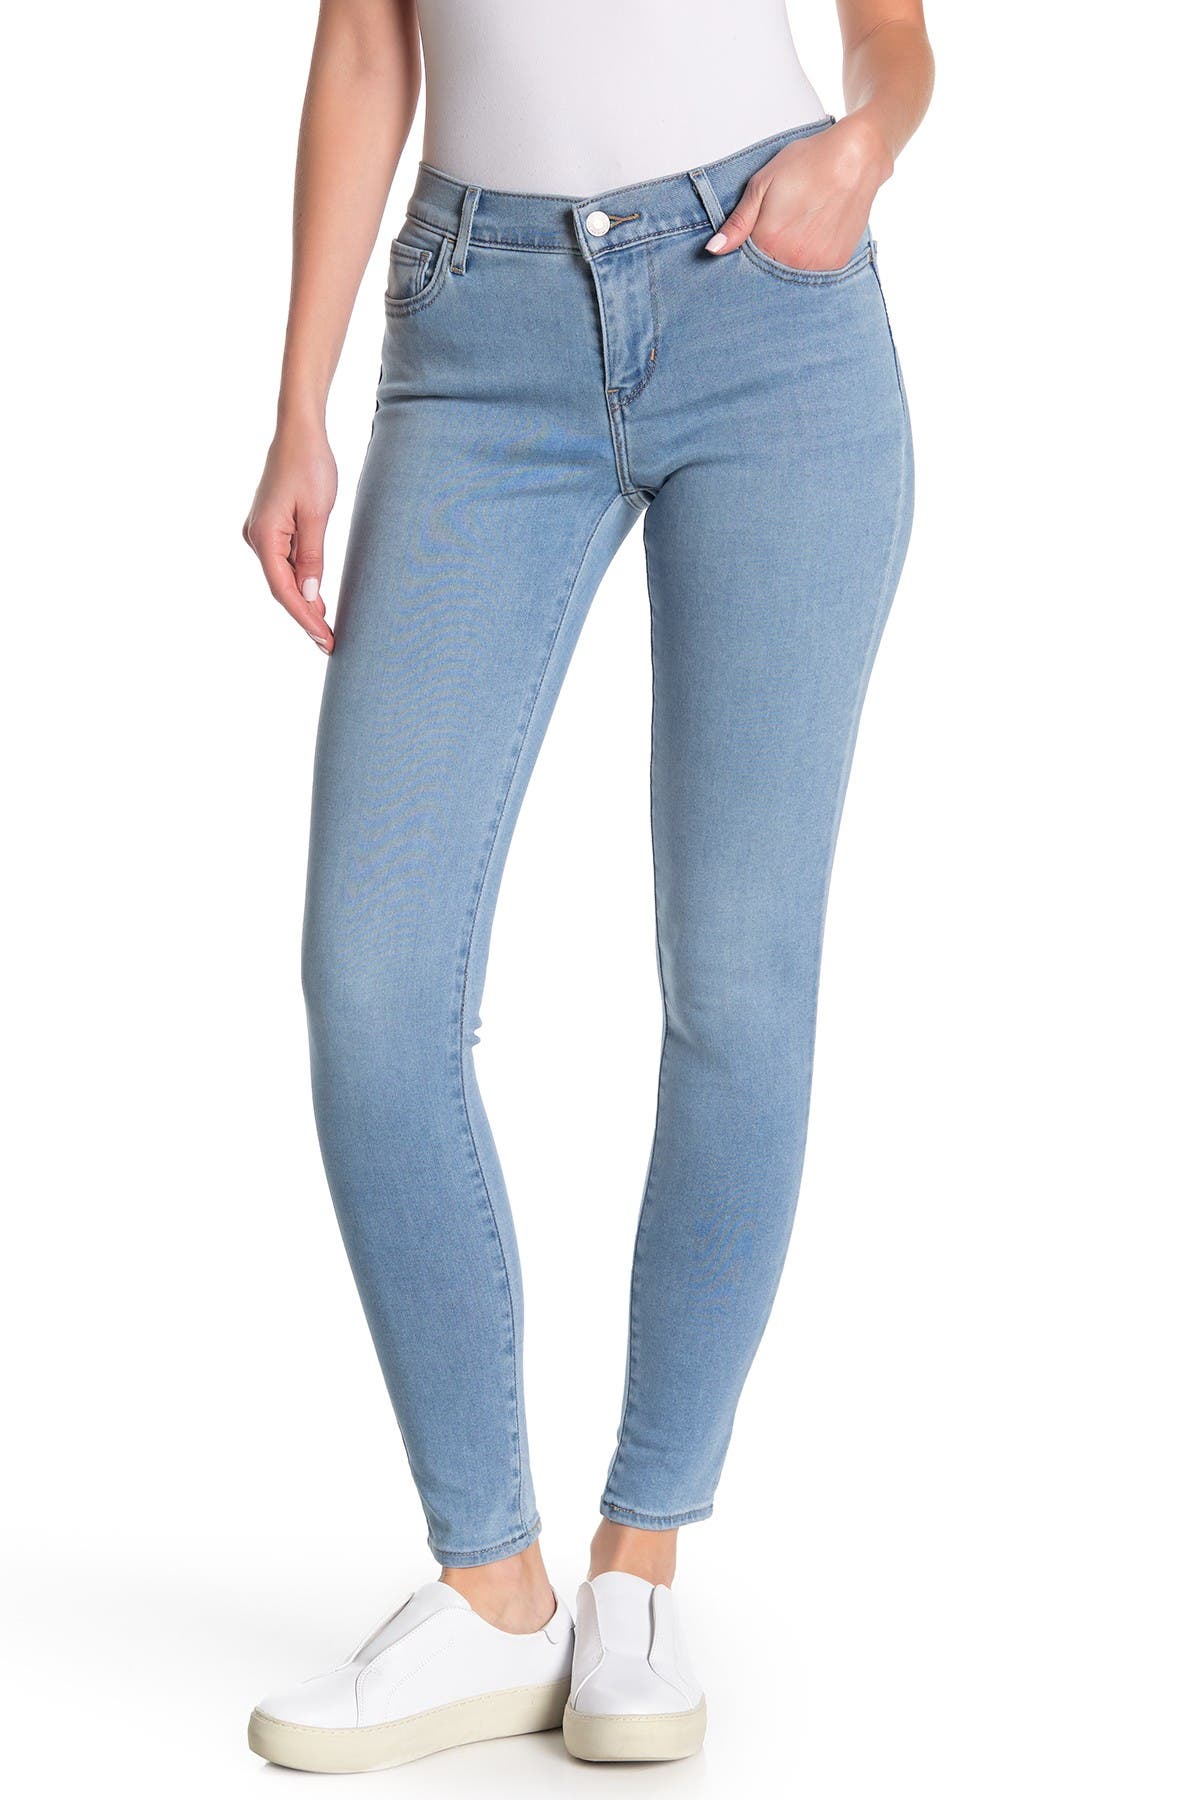 levi 710 super skinny jeans